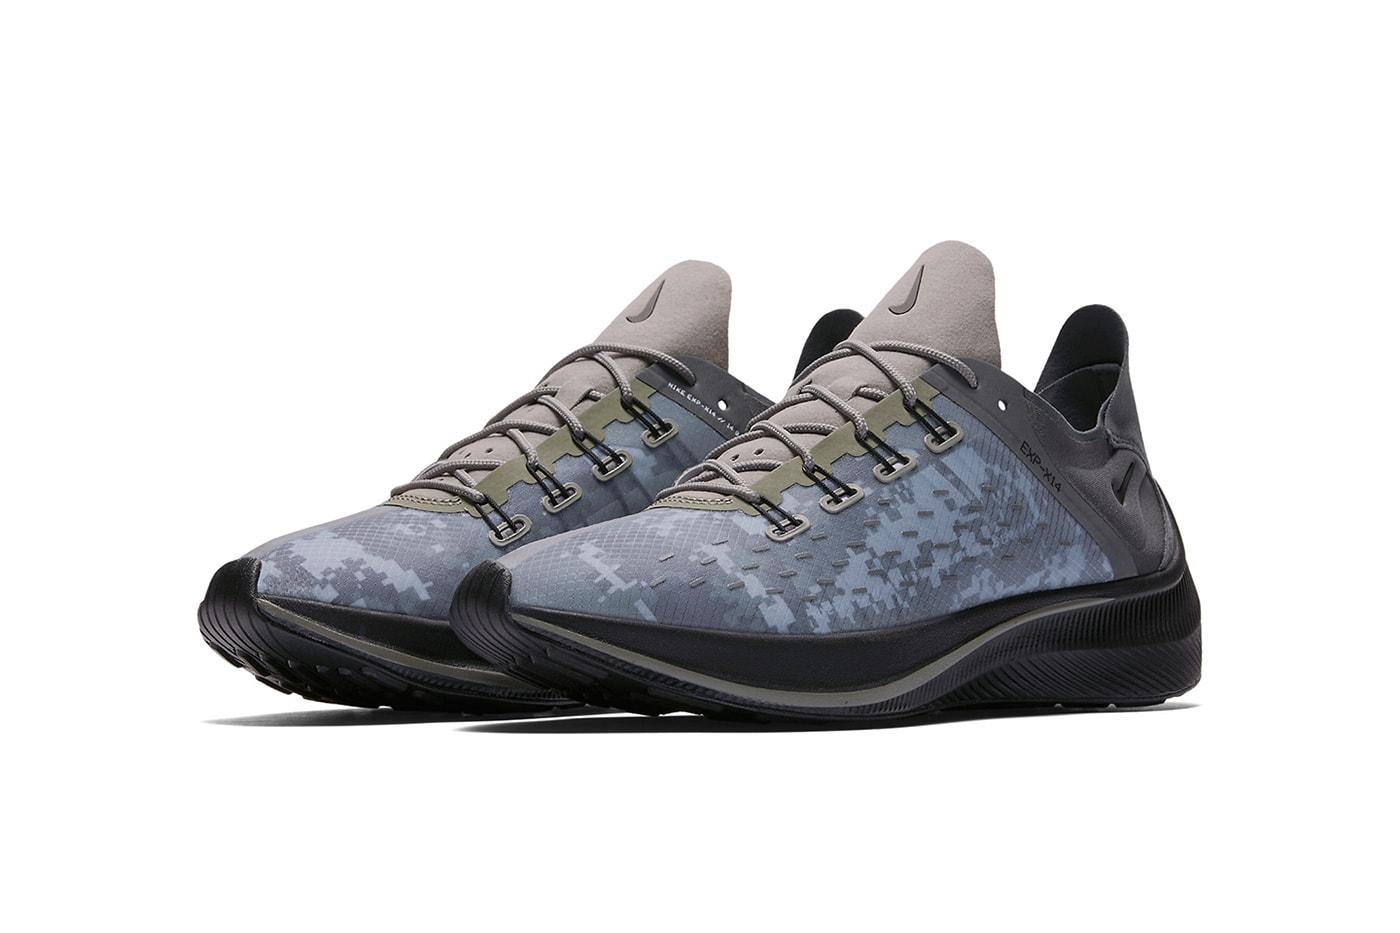 Nike EXP X14 dark stucco black dark grey 2018 footwear